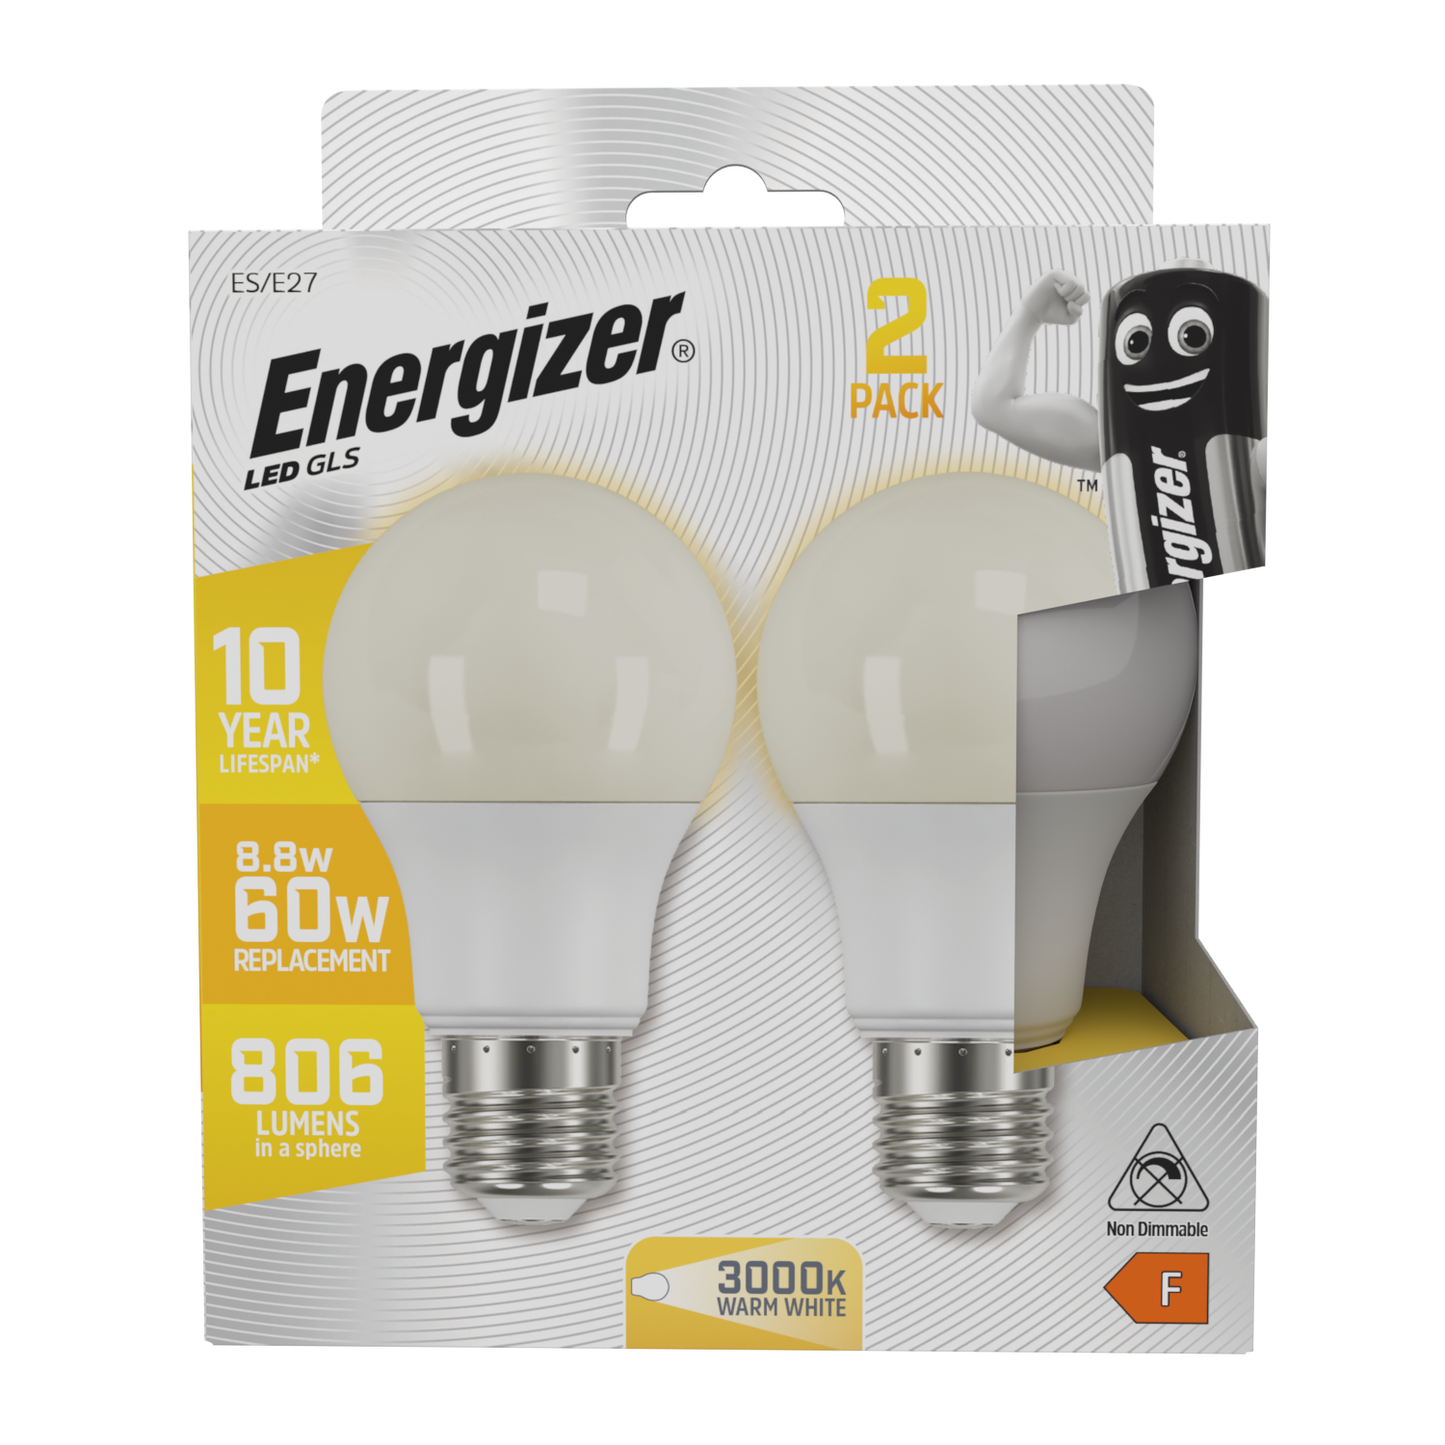 Energizer LED GLS E27 (ES) 806lm 8.8W 3,000K (Warm White), Box of 2